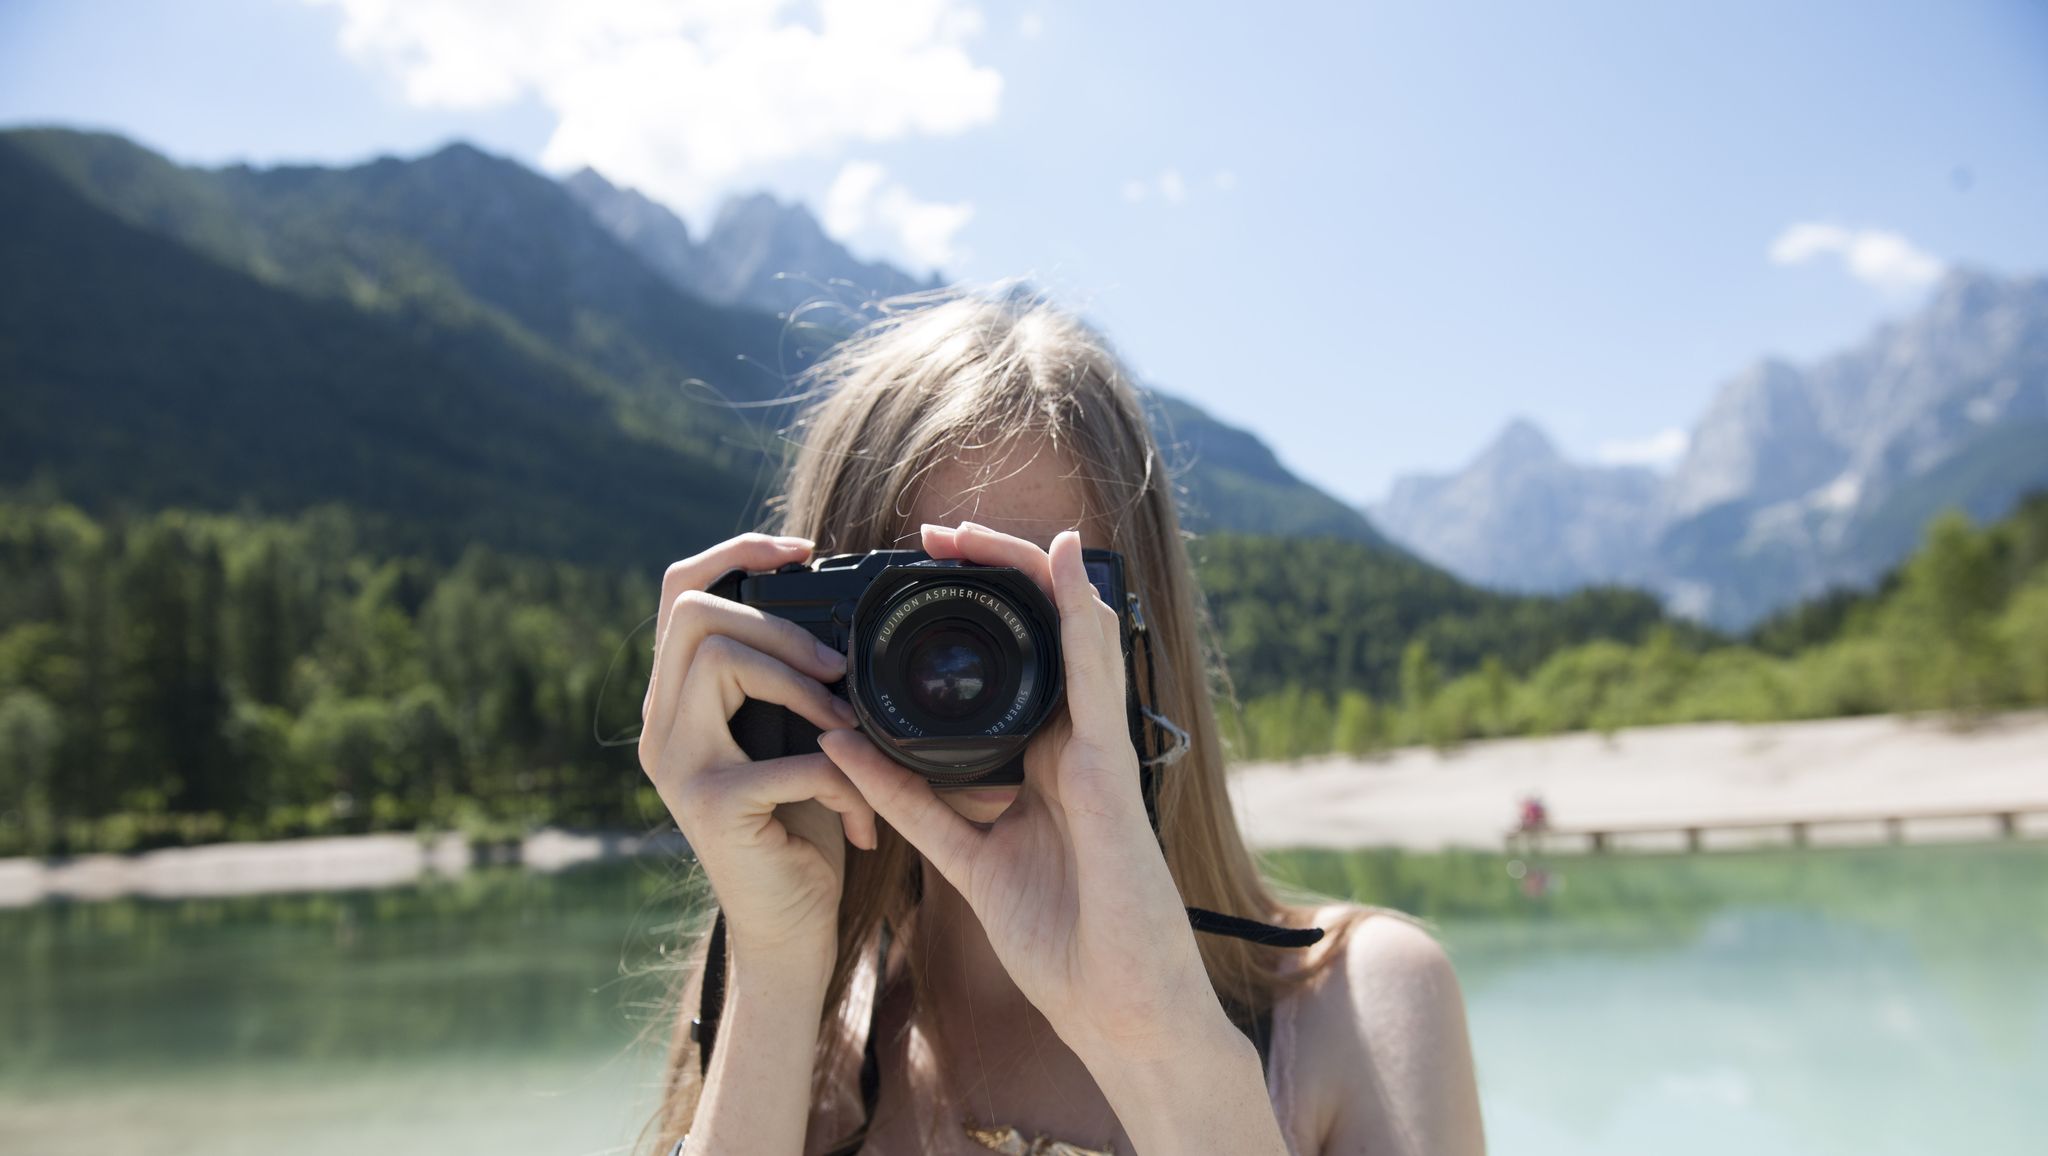 Photograph, Beauty, Skin, Mountain, Summer, Snapshot, Photography, Vacation, Shoulder, Cameras & optics, 